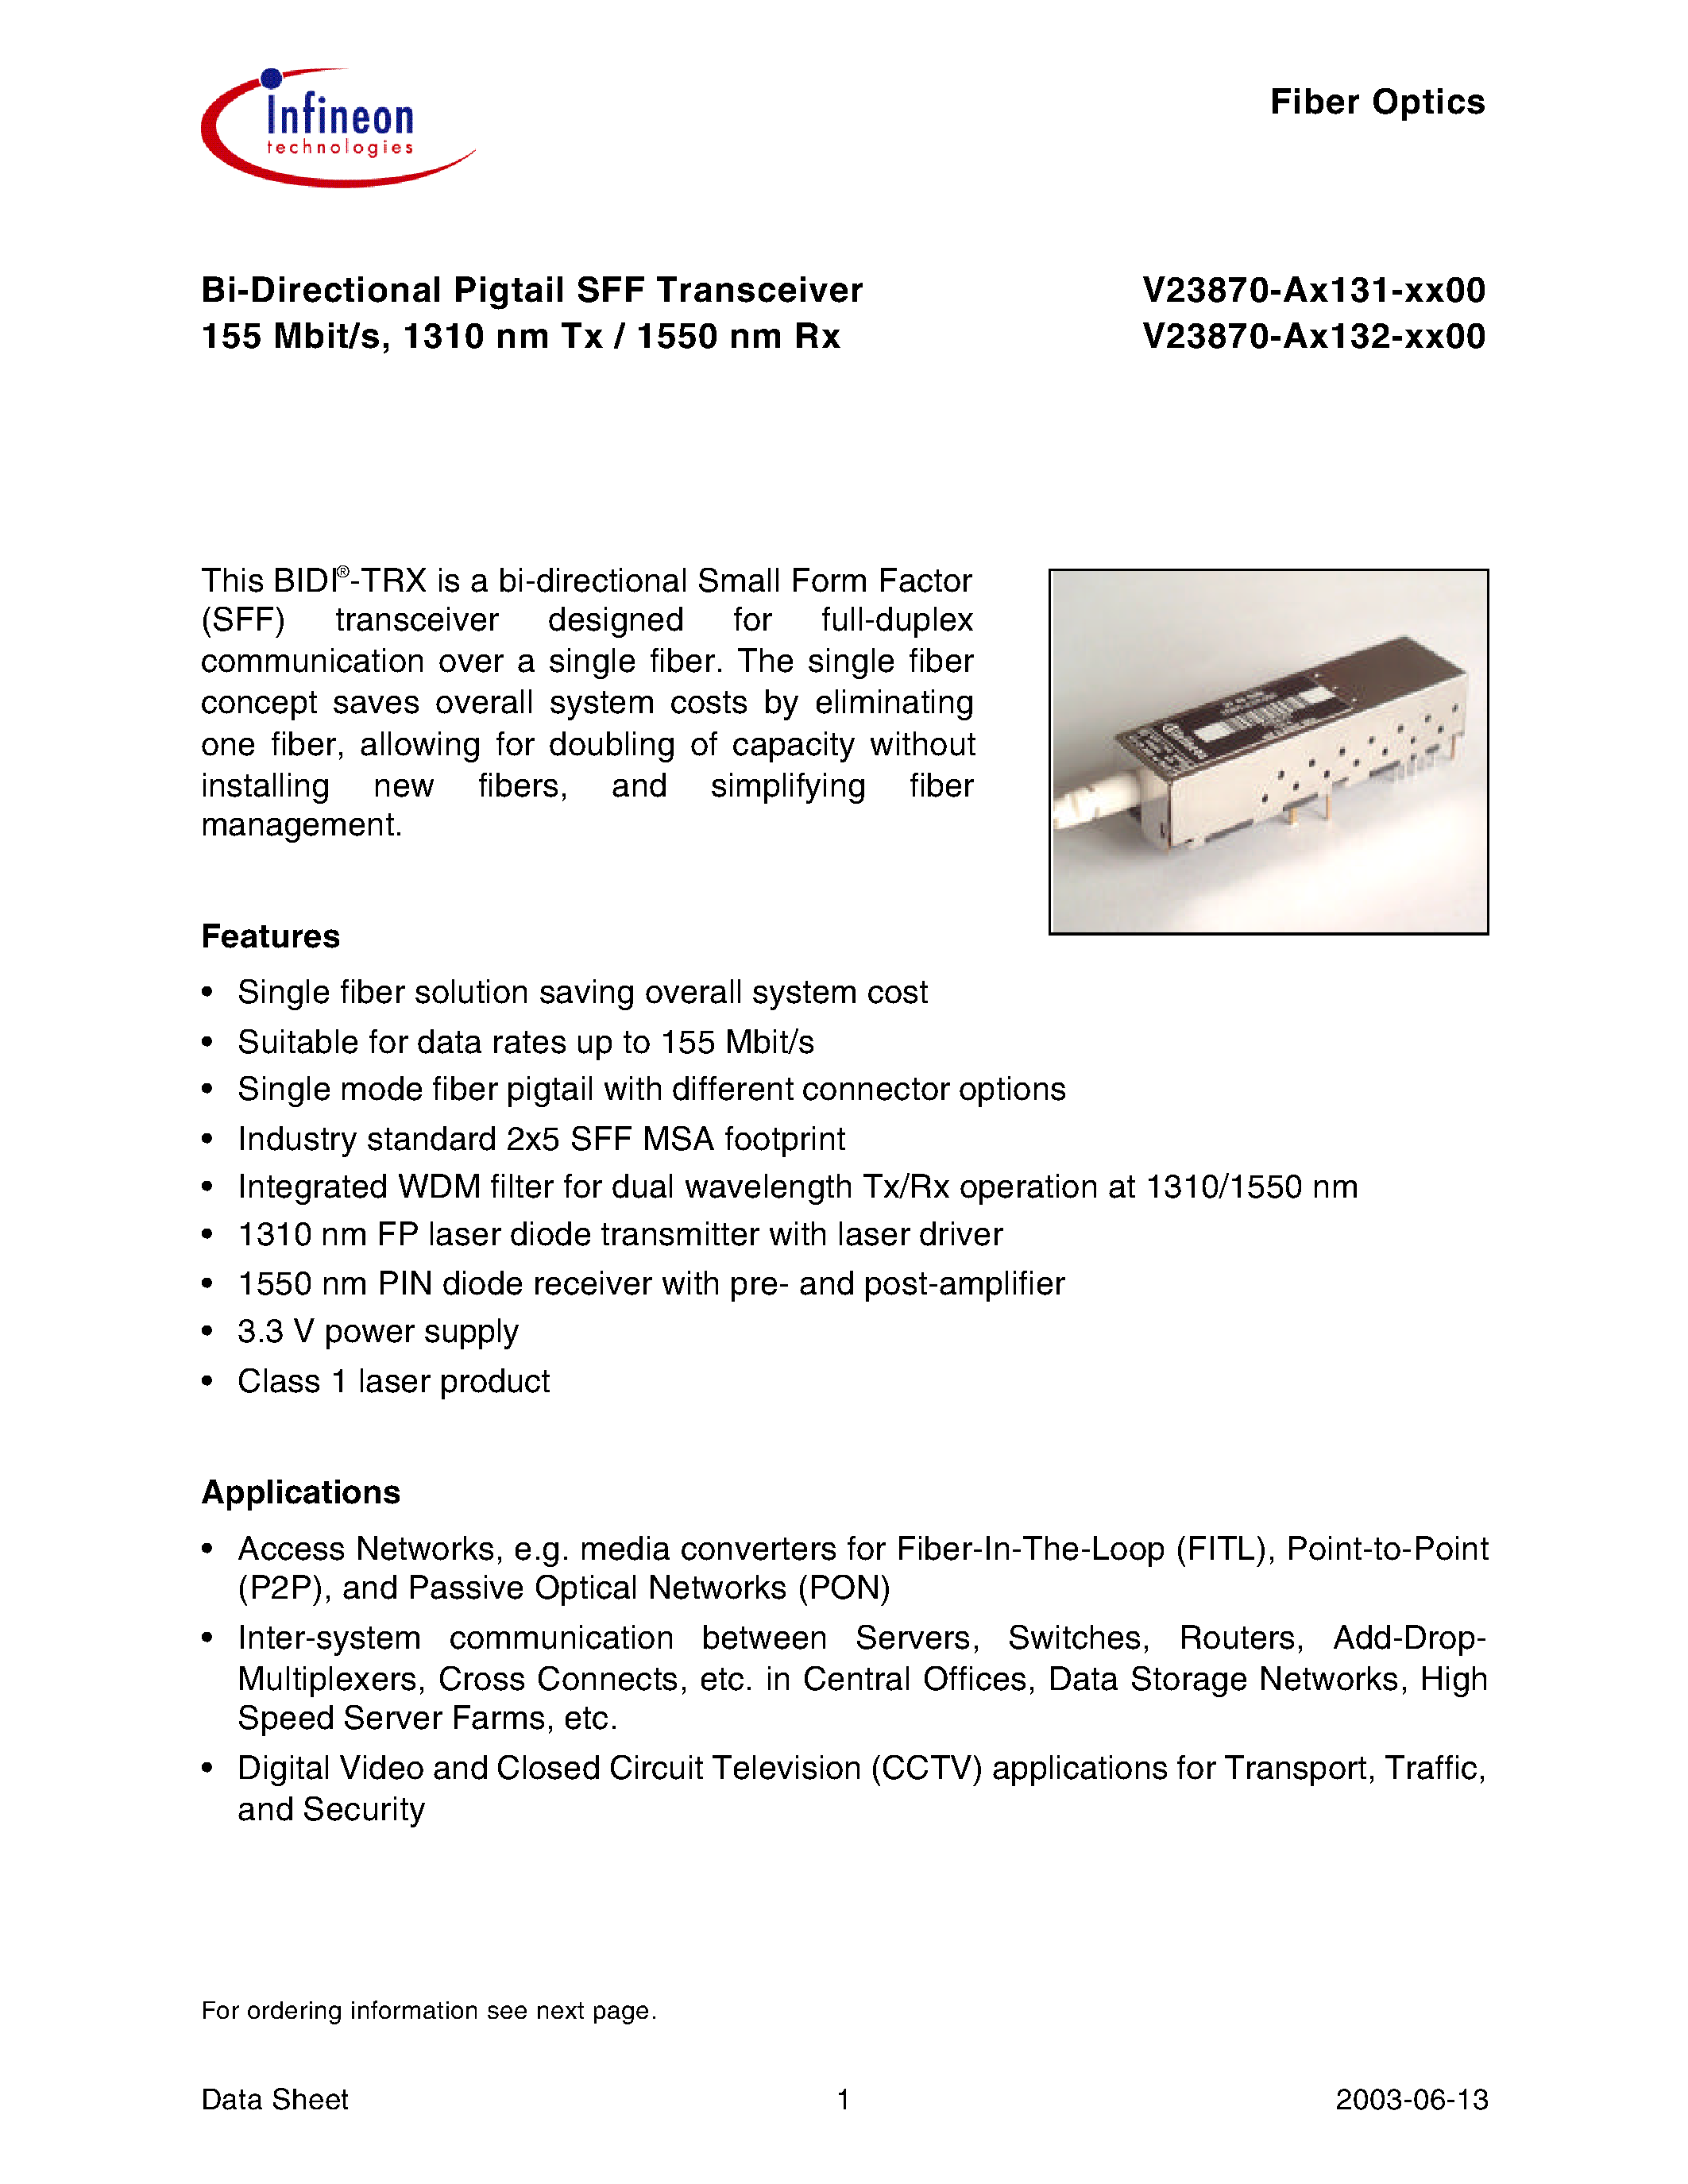 Даташит V23870-A3131-F500 - Bi-Directional Pigtail SFF Transceiver 155 Mbit/s/ 1310 nm Tx / 1550 nm Rx страница 1